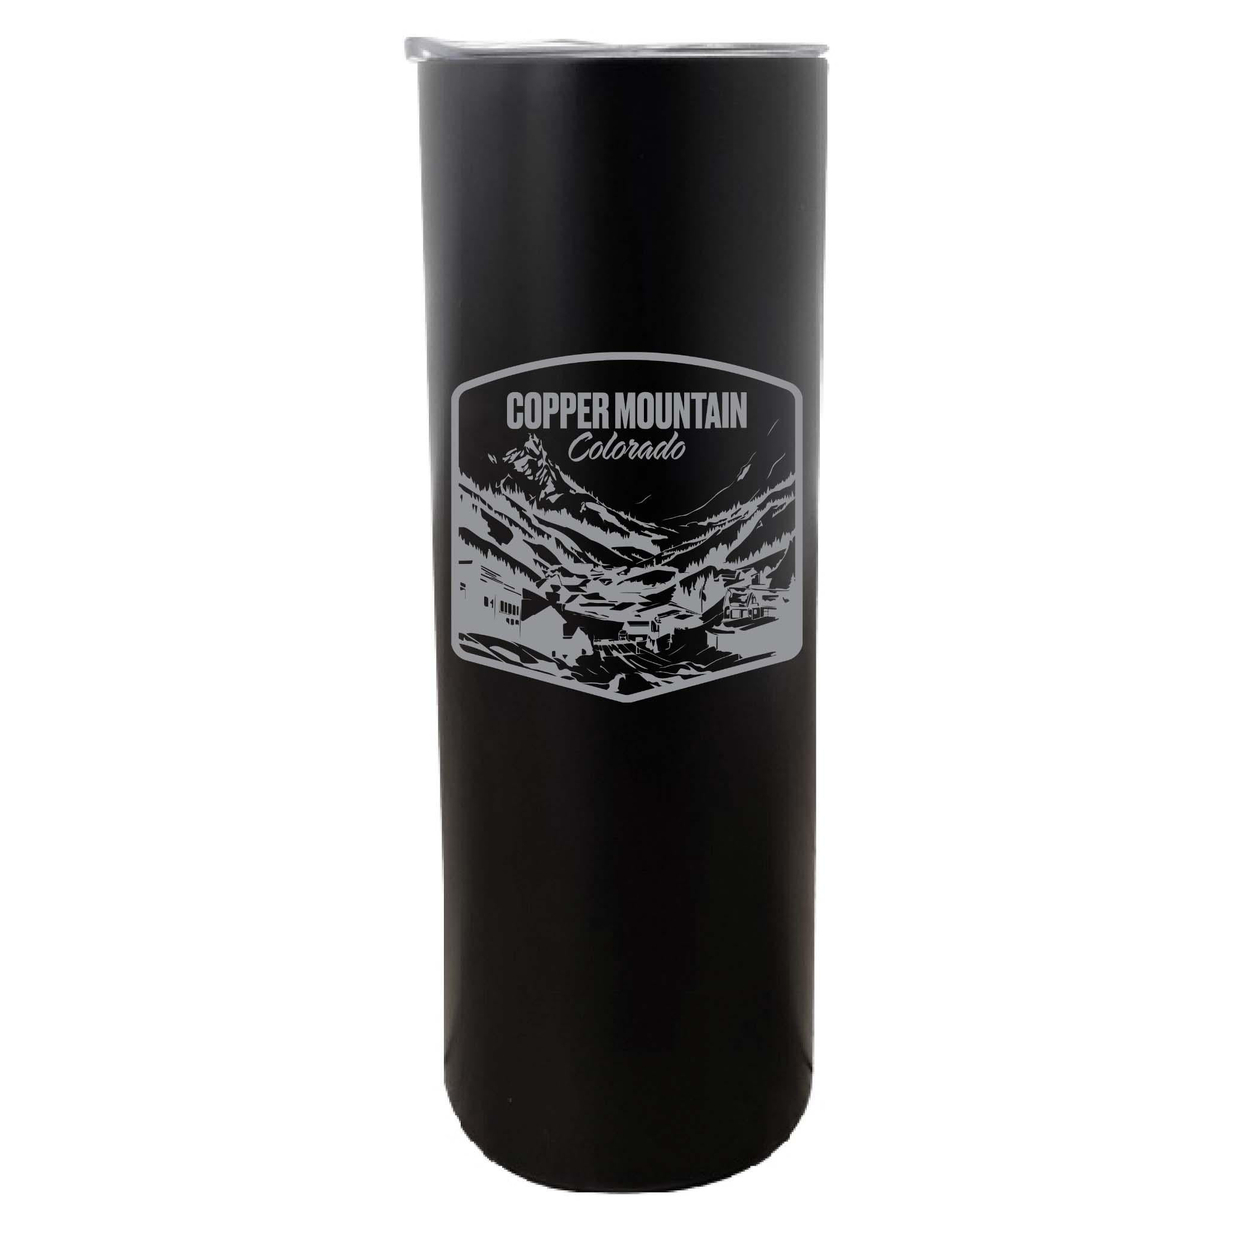 Copper Mountain Souvenir 20 Oz Engraved Insulated Skinny Tumbler - Black,,Single Unit